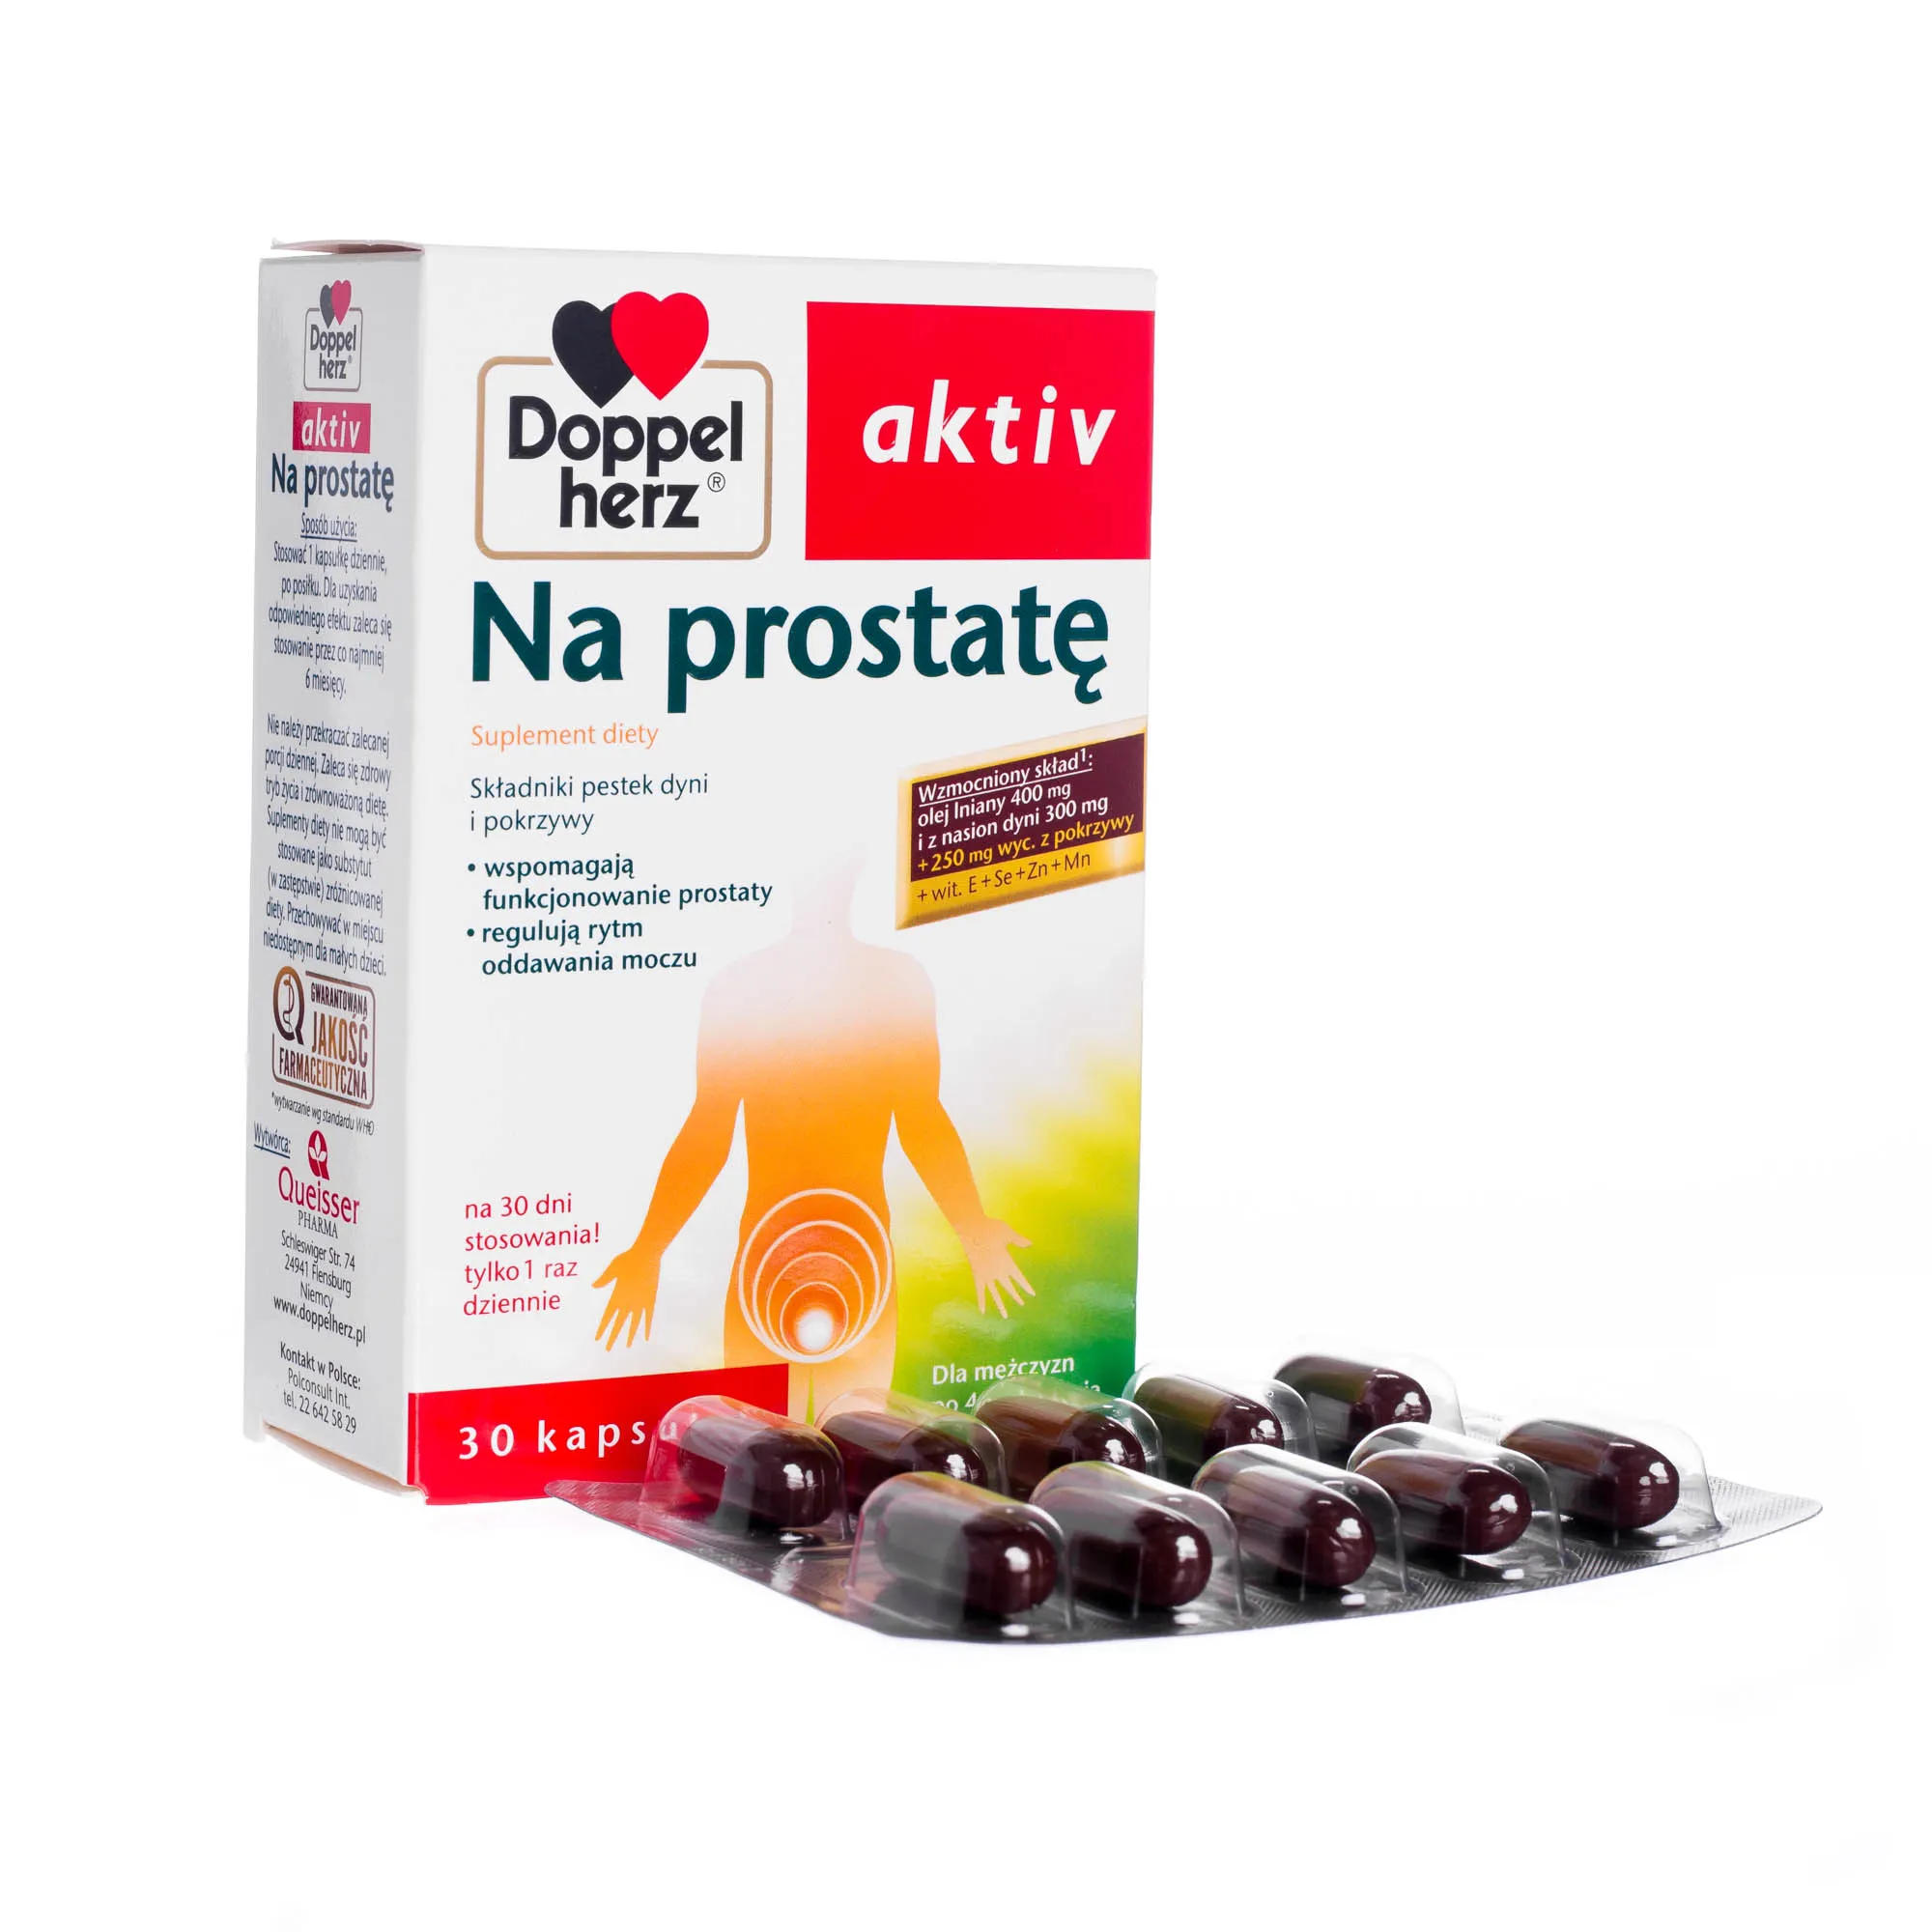 Doppelherz aktiv na prostatę, suplement diety 30 kapsułek.